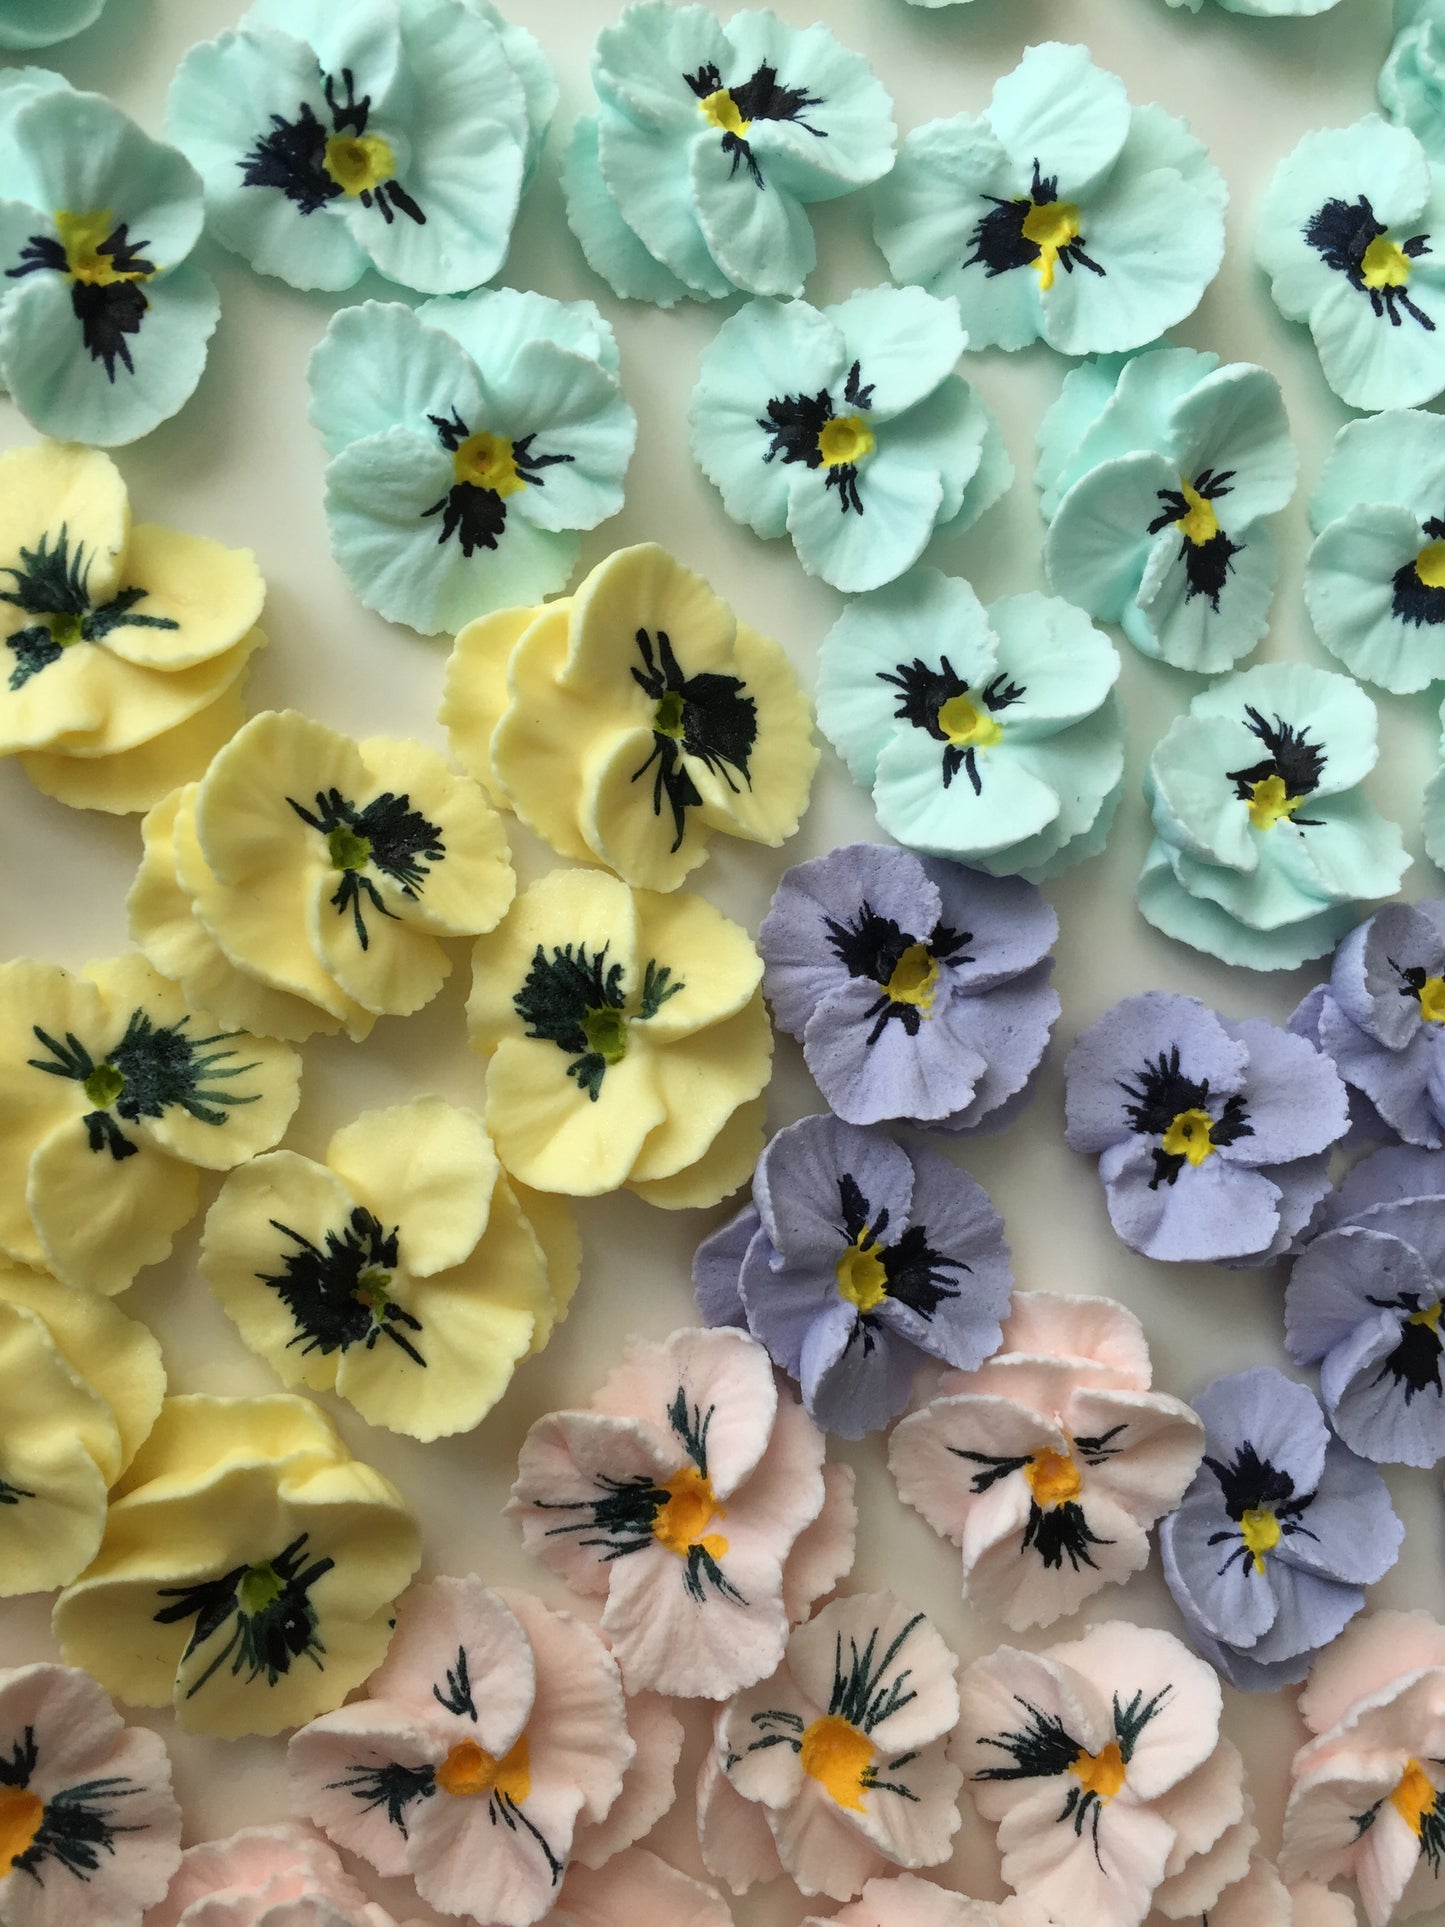 Royal Icing "Petite Fleurs" Collection